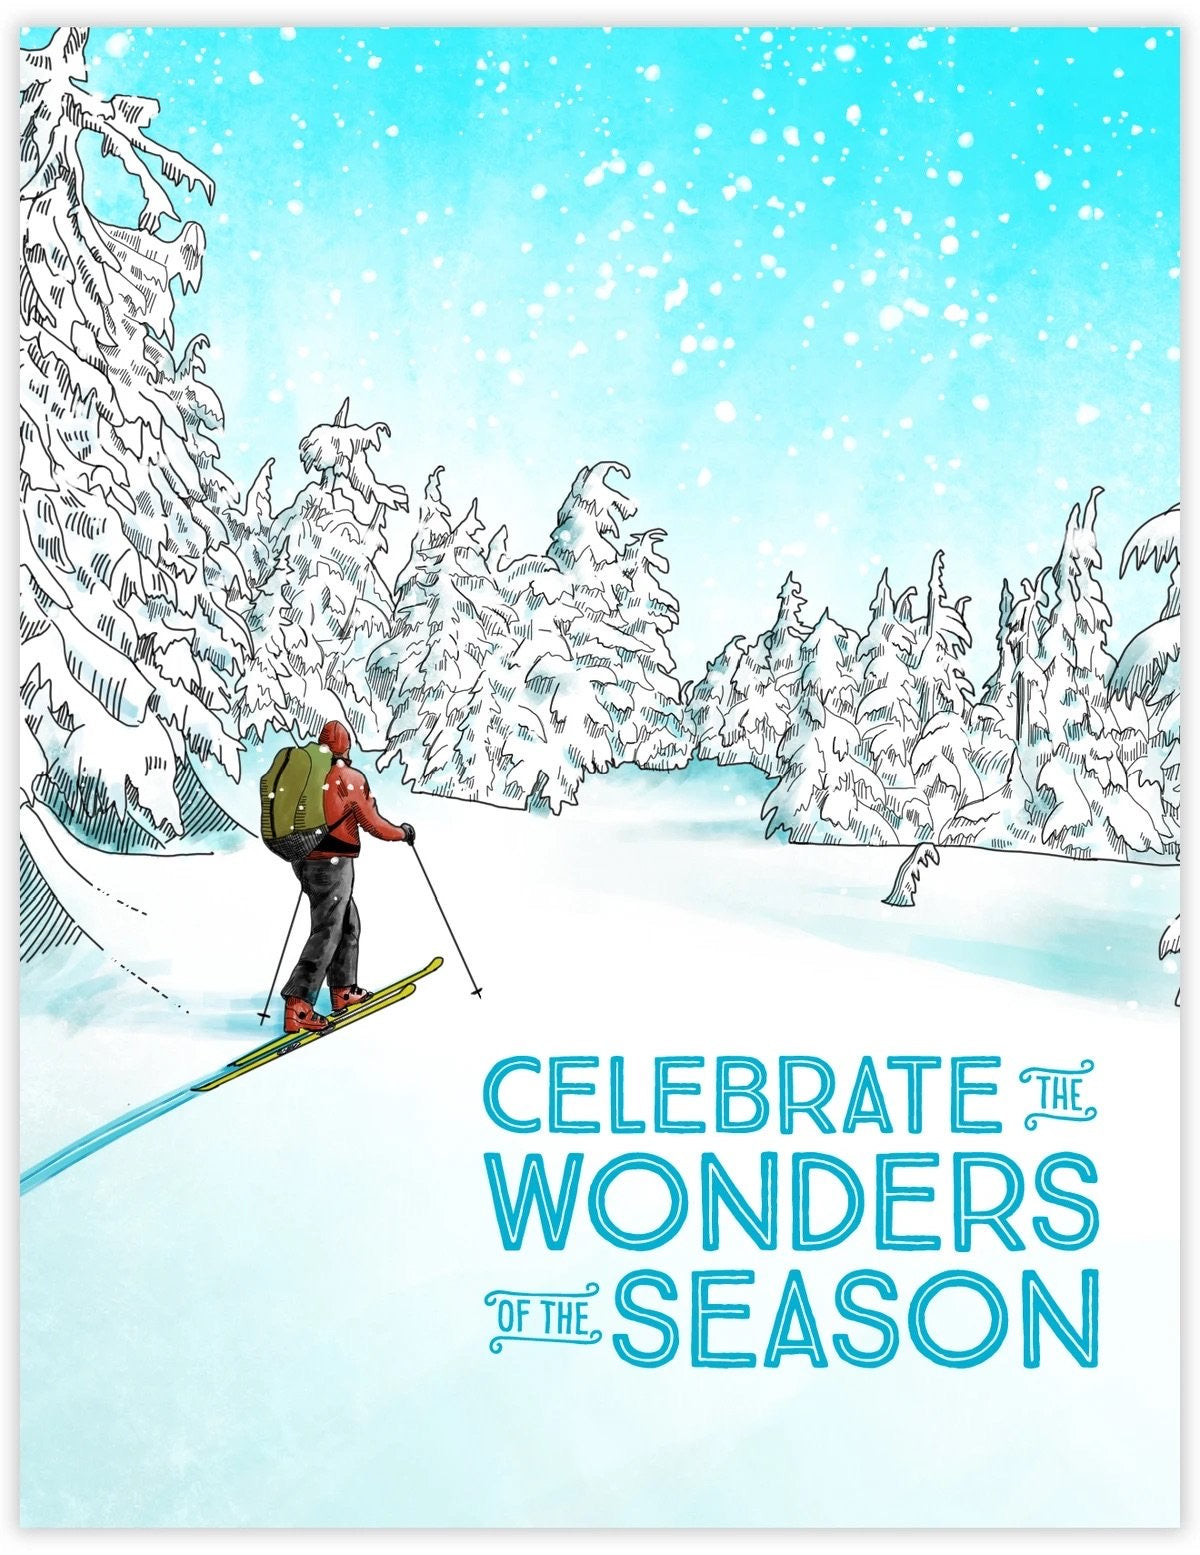 Celebrate the wonders of the season greeting card